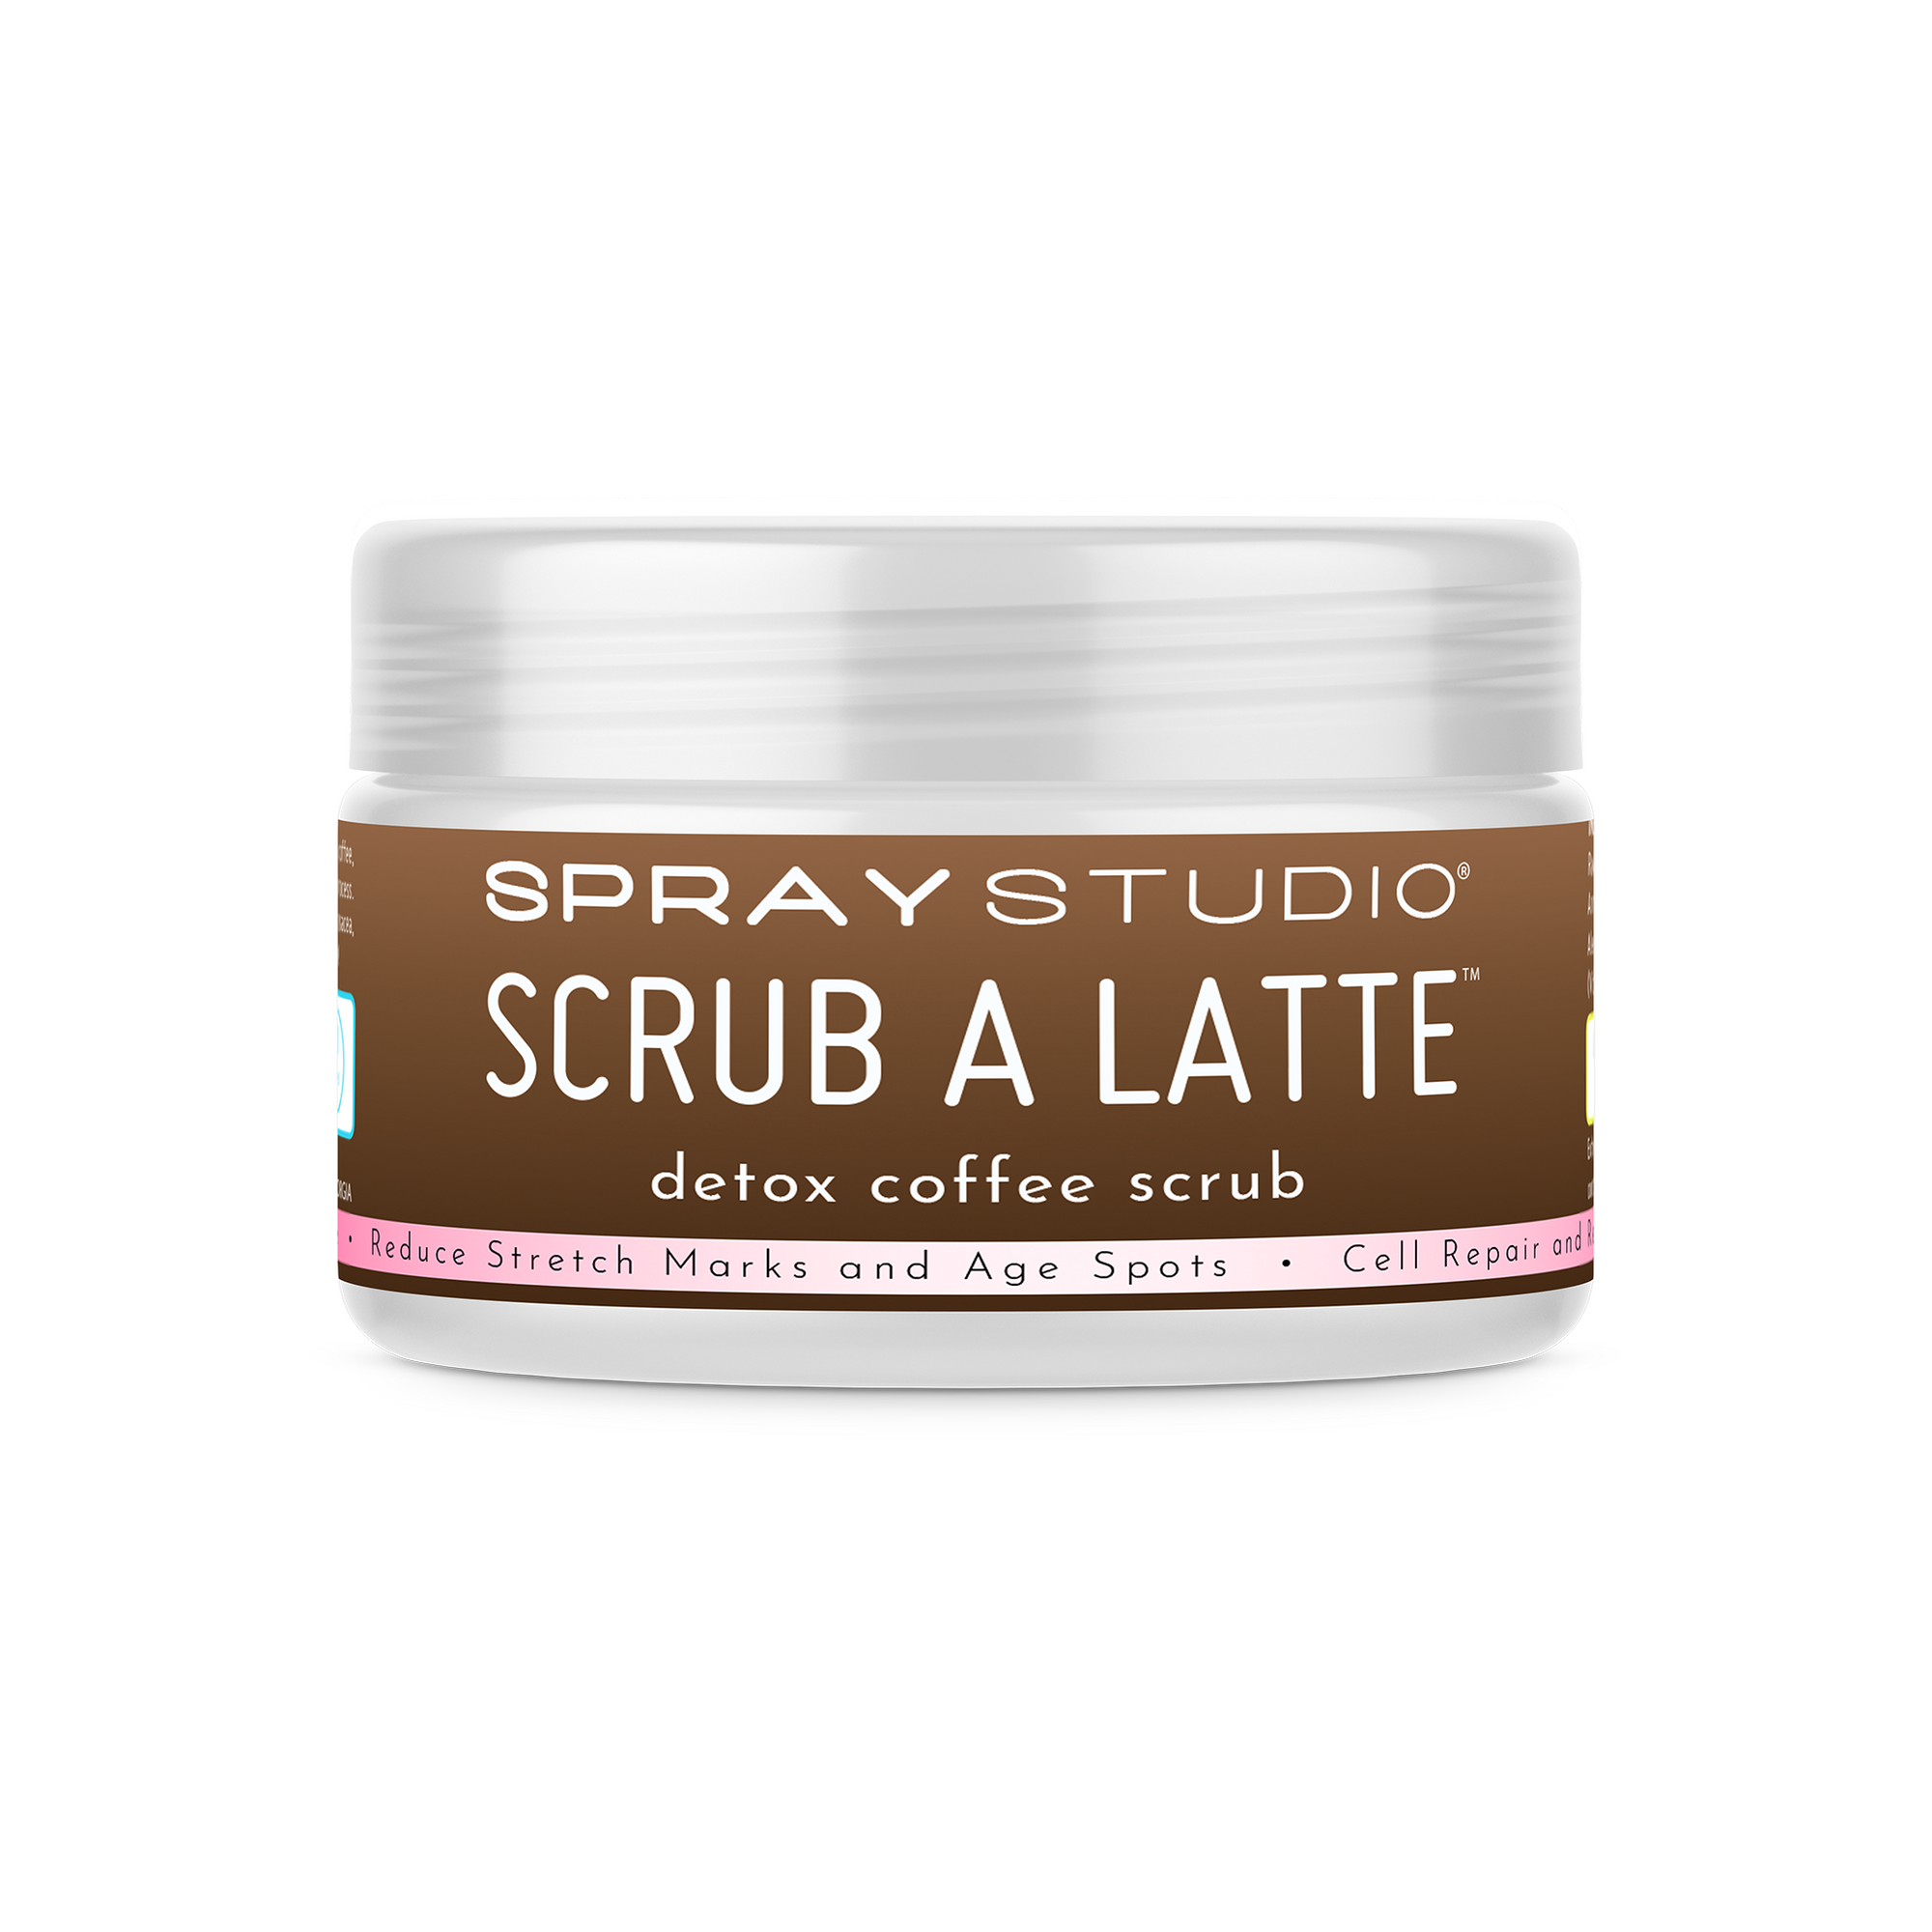 SPRAY STUDIO SCRUB-A-LATTE DETOX COFFEE BODY SCRUB